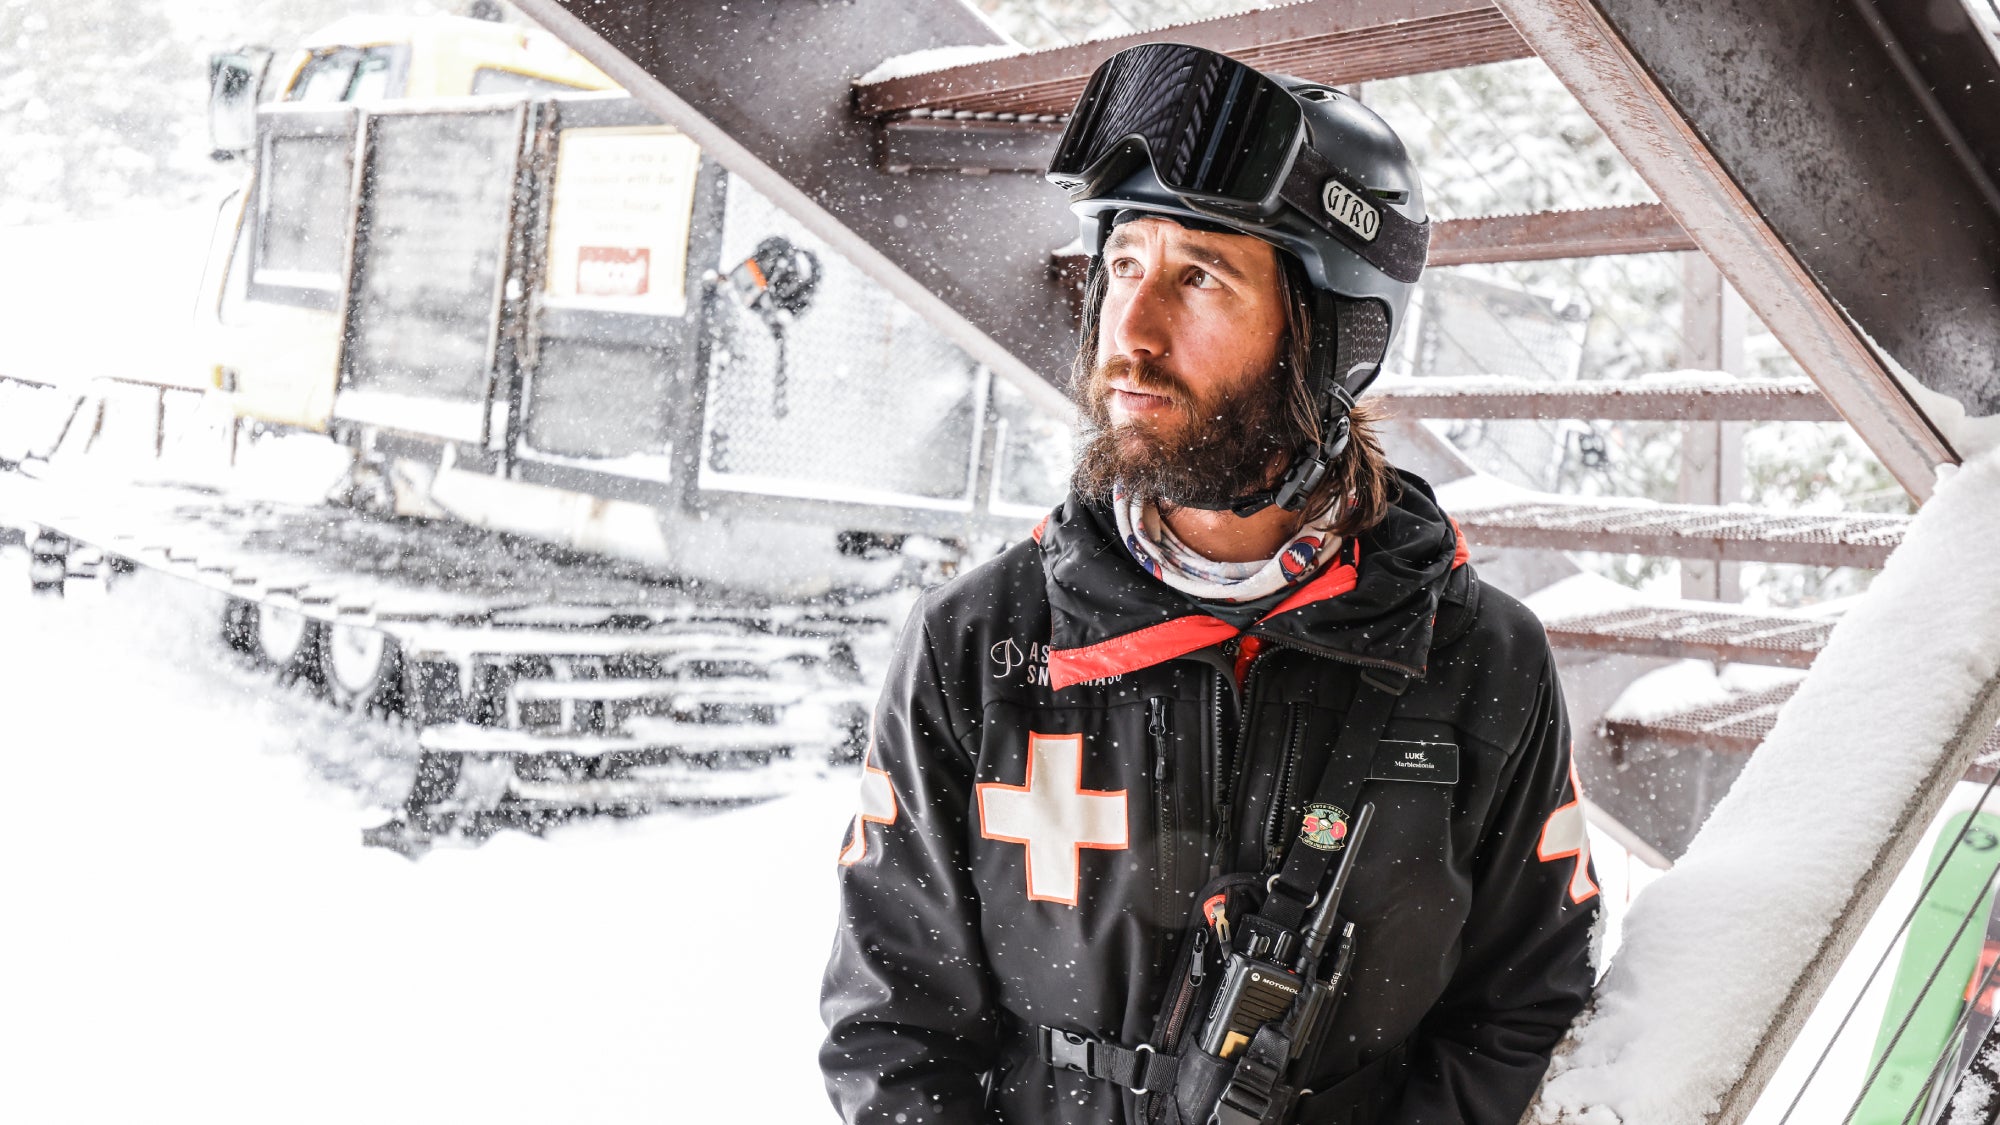 Luke Demuth standing under a stairway in heavy snow with a snowcat vehicle behind him.